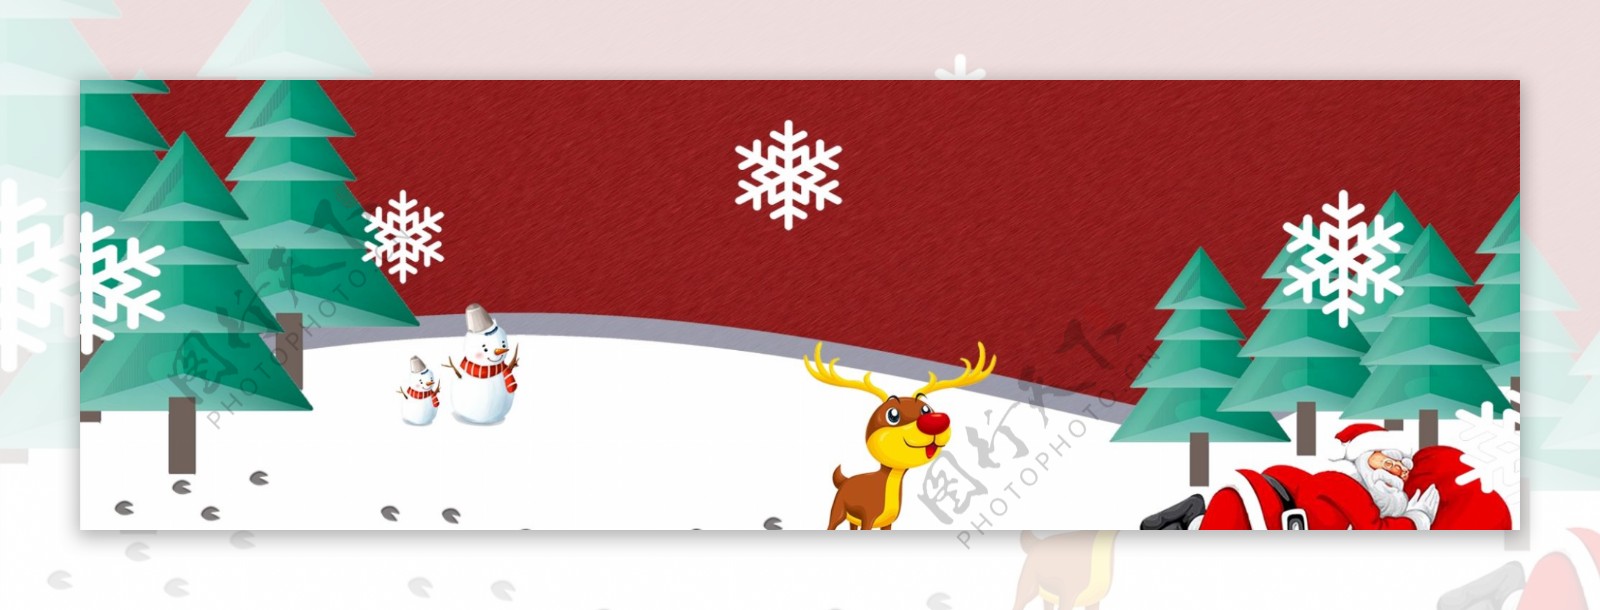 红色卡通圣诞活动促销banner背景